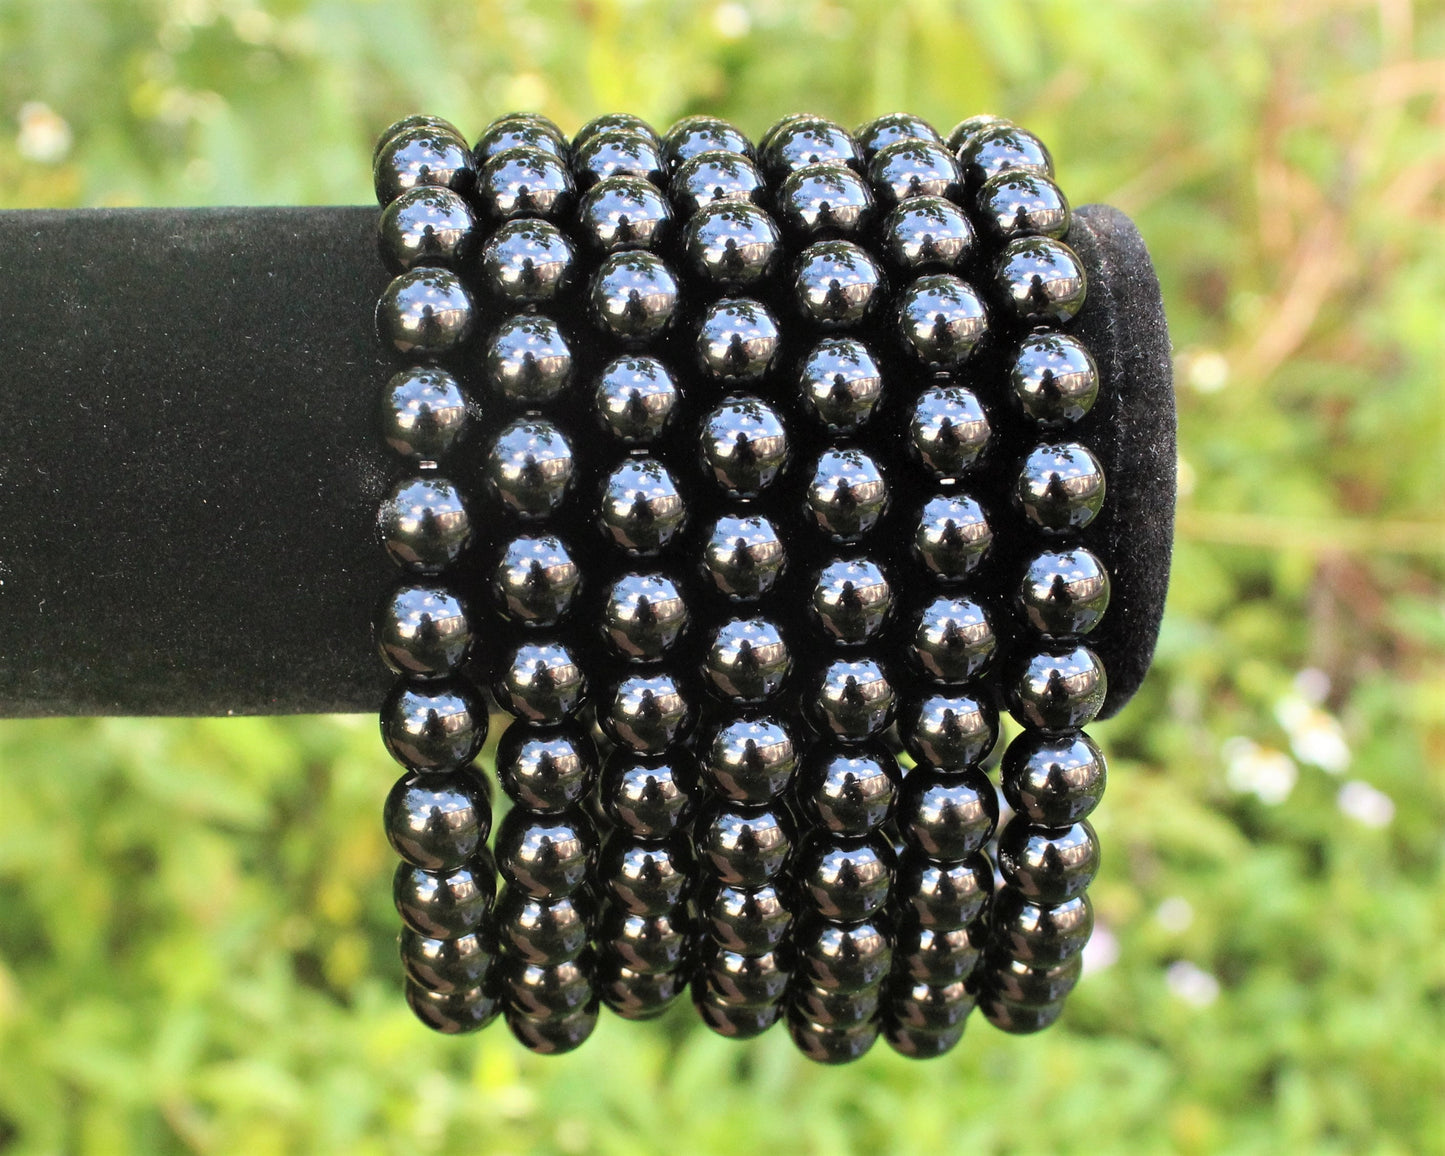 Rainbow Obsidian Bead Bracelet